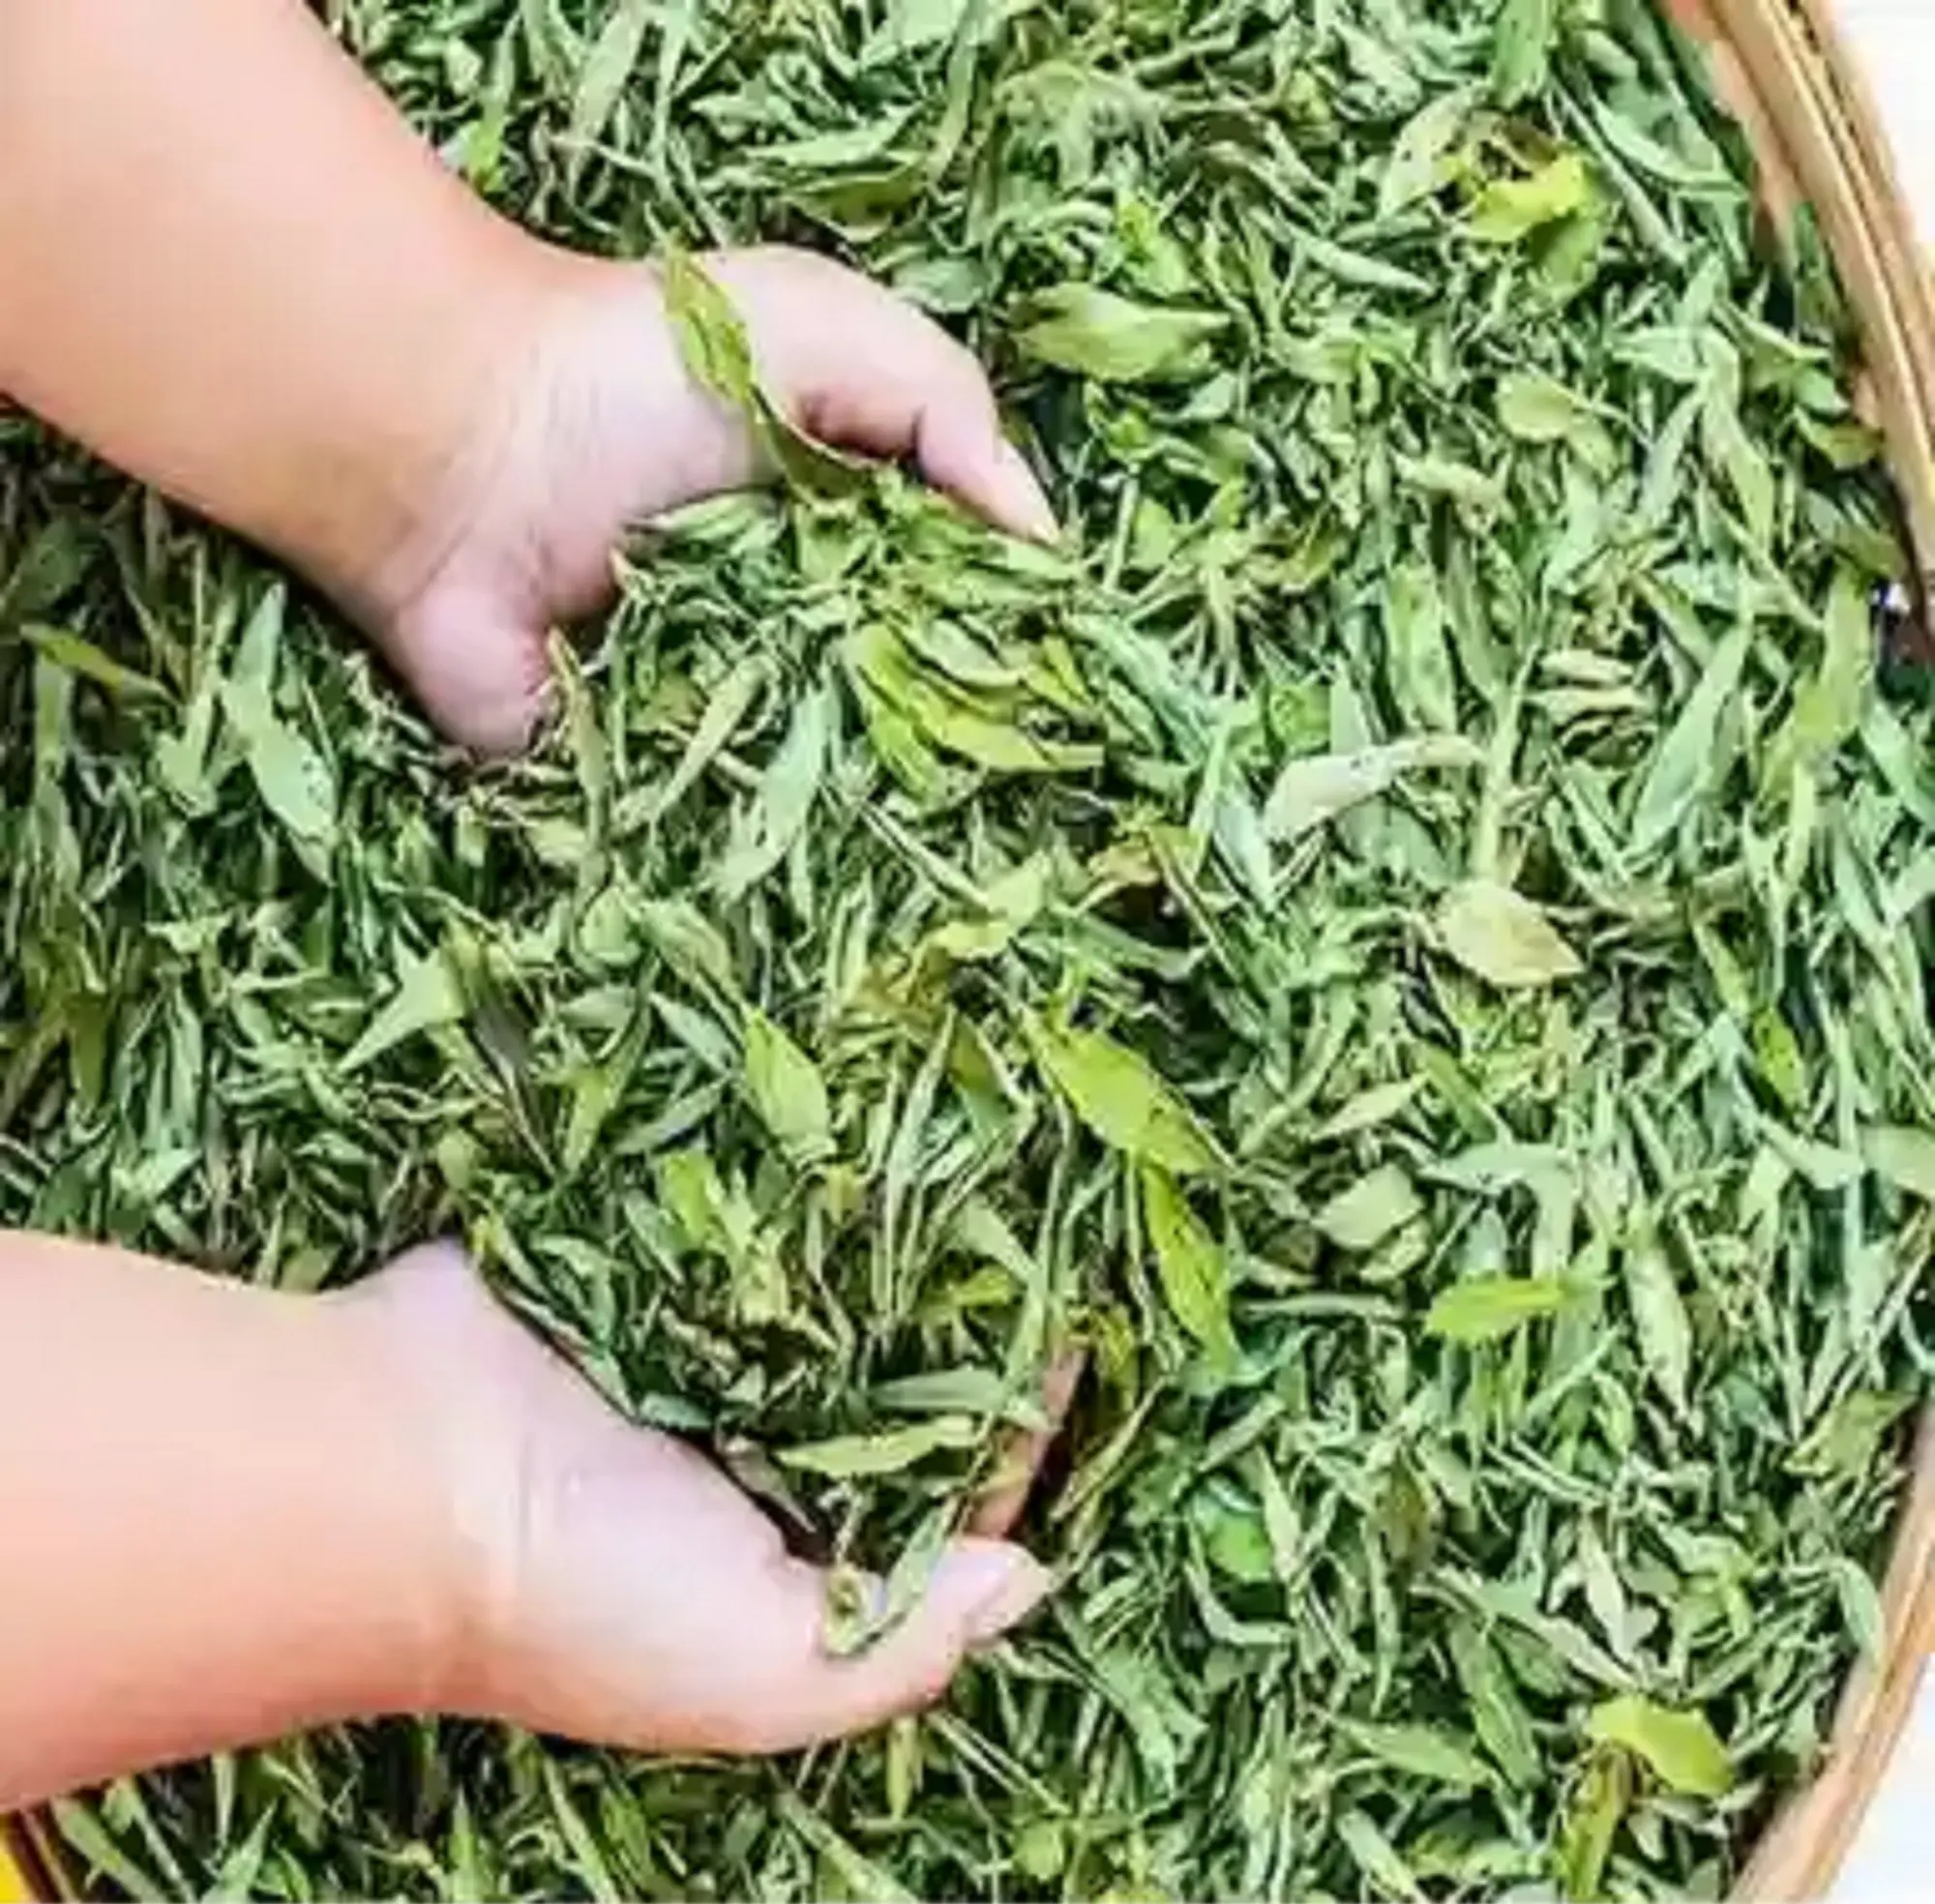 Harga pemasok terbaik jumlah besar 1kg daun kering daun Stevia untuk pembelian massal dan label pribadi tersedia